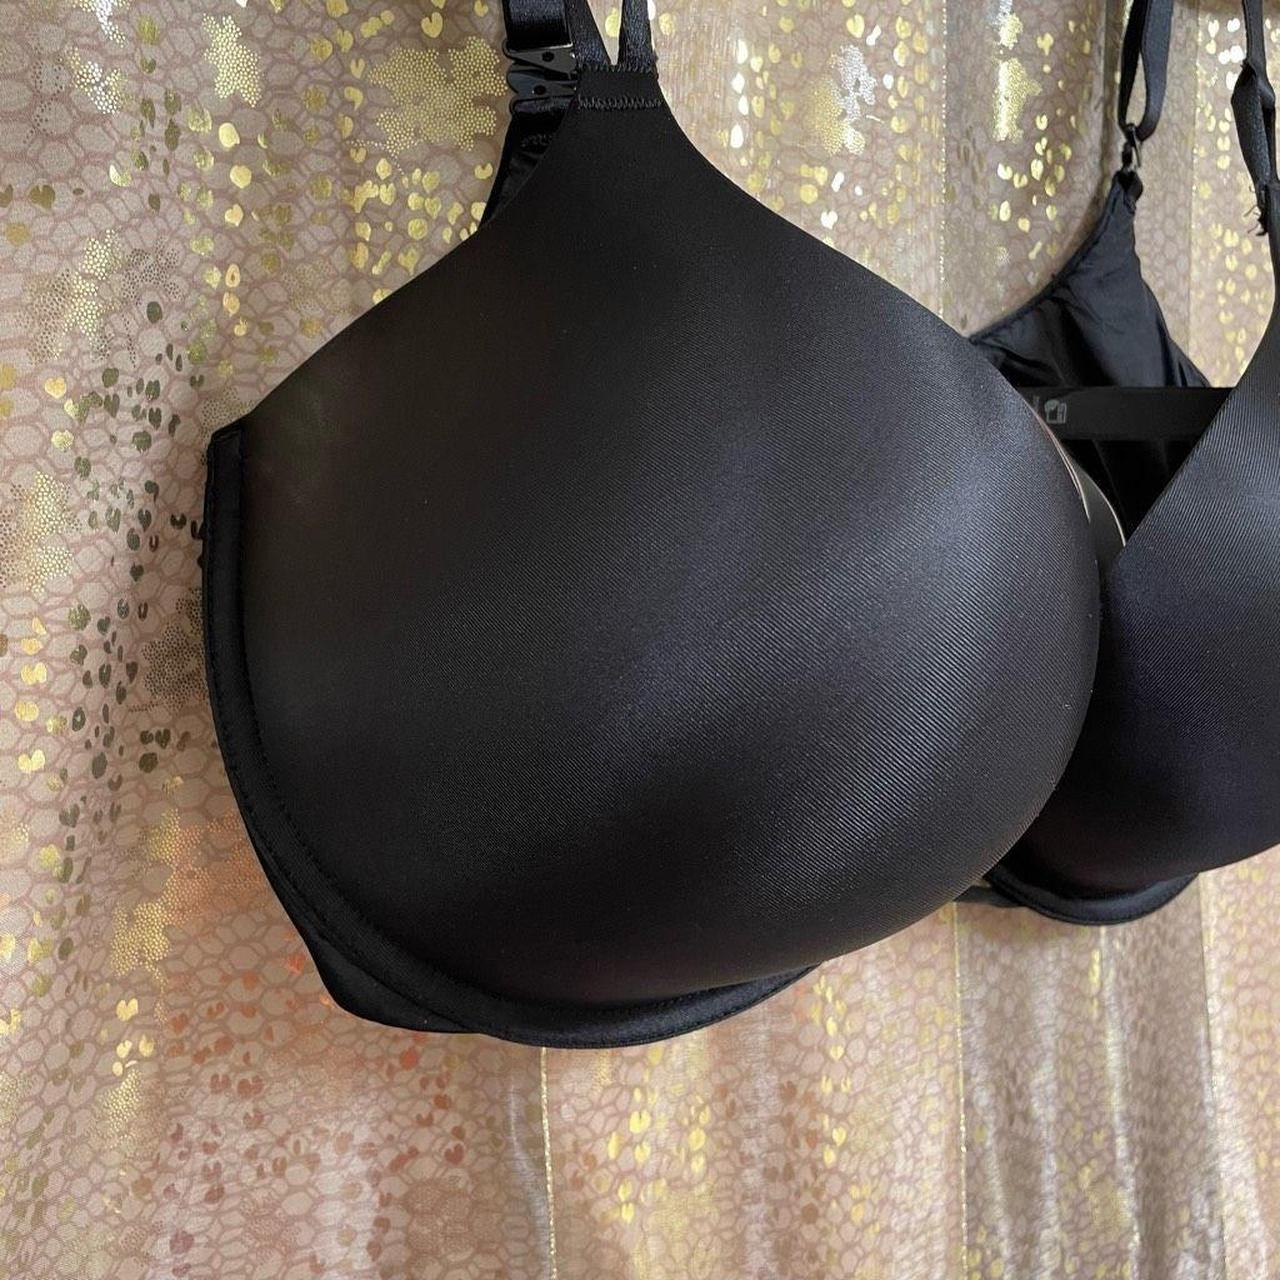 Black Victoria's Secret Bombshell push-up bra with - Depop